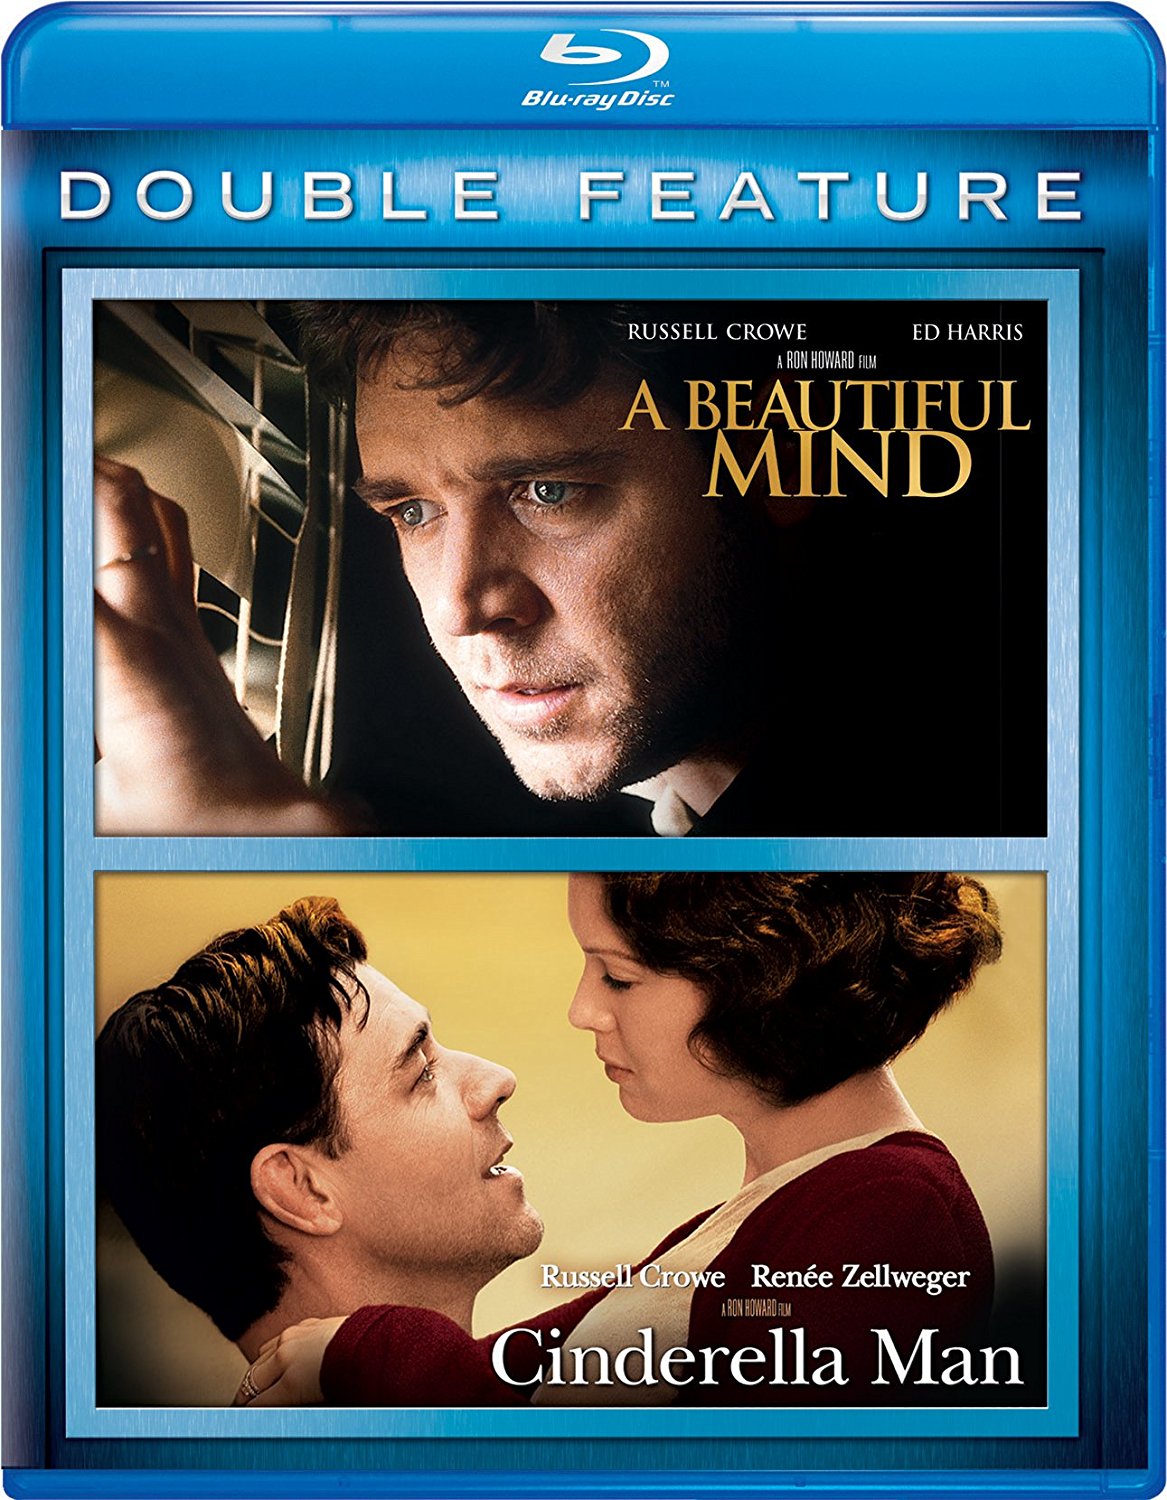 A Beautiful Mind & Cinderella Man Blu-ray Only $5.72!